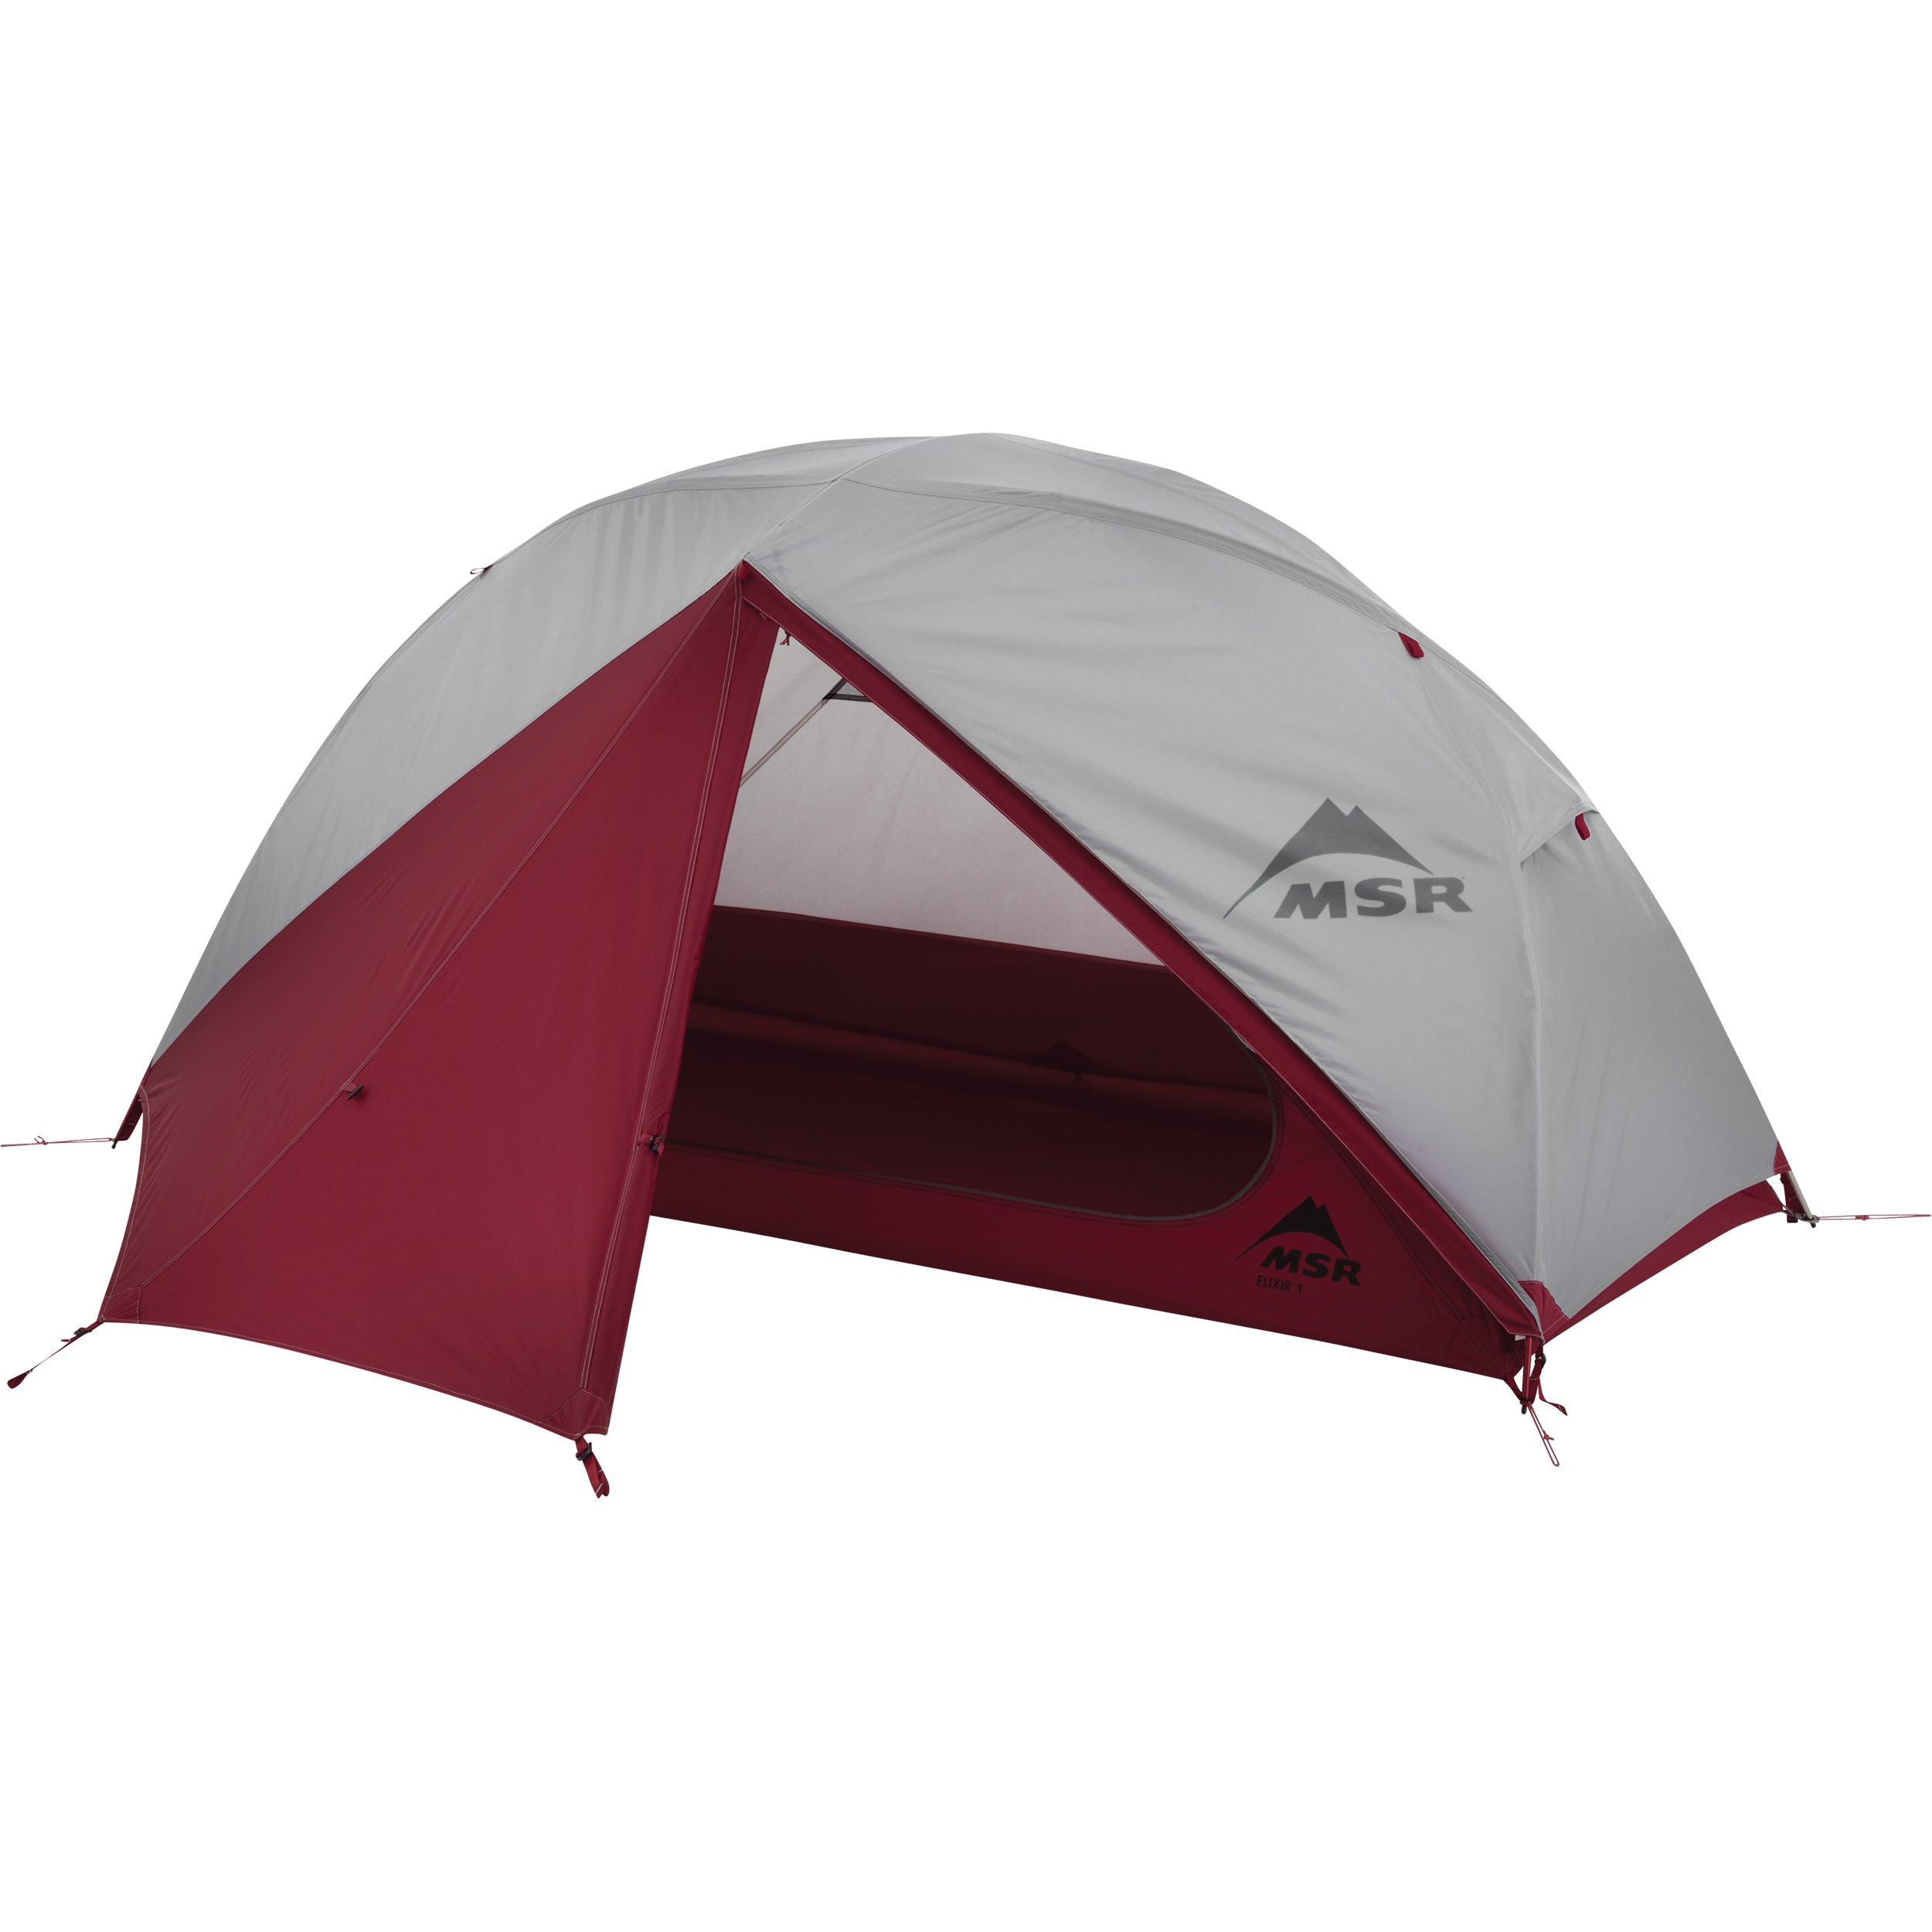 Thous Winds Outdoor Mini Camp Light Outdoor Camping Camp Light Tent De